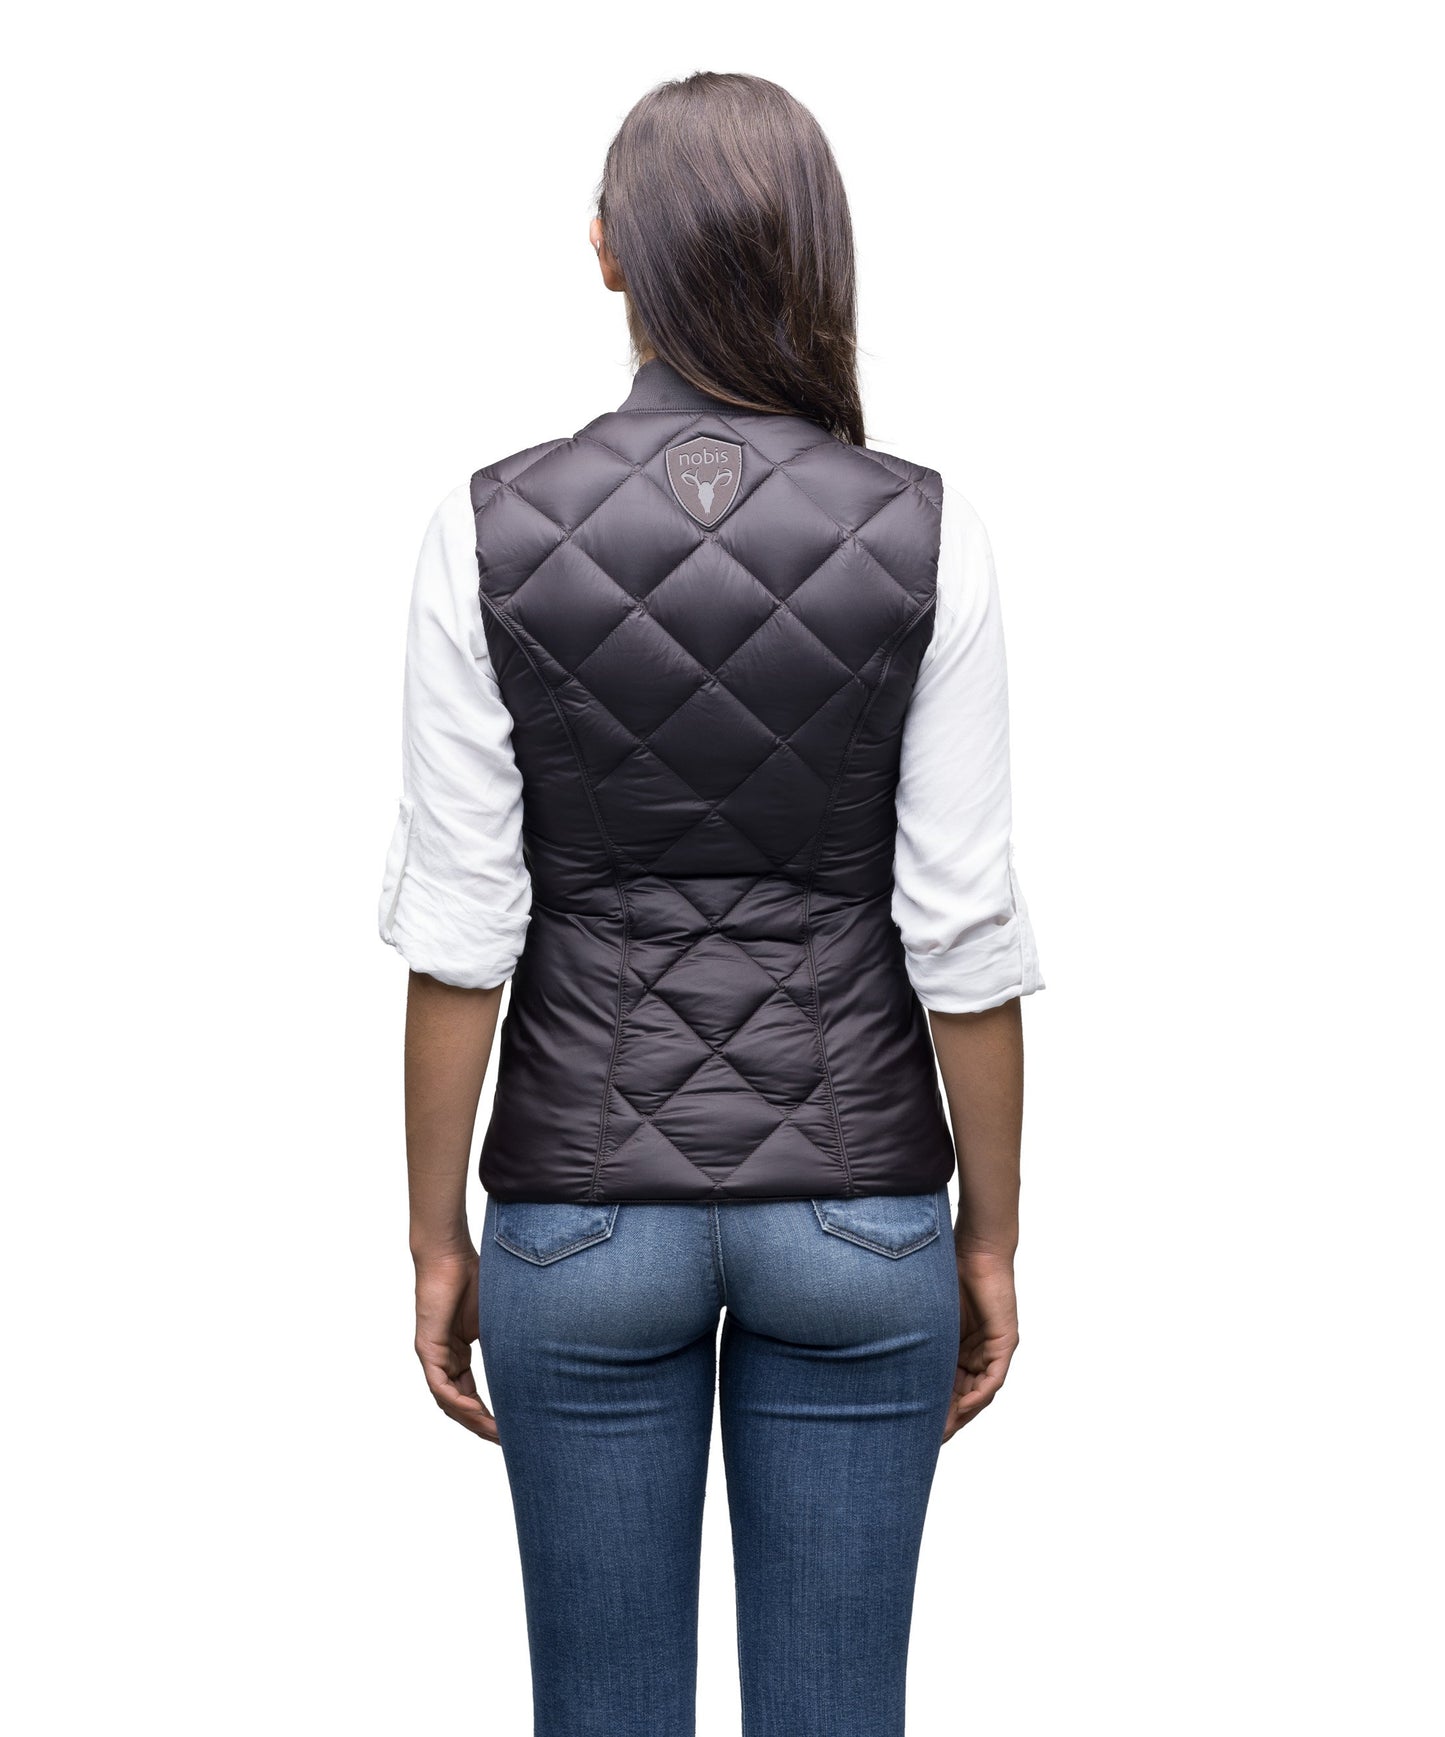 Women's slim fitting quilted vest in Dark Brown